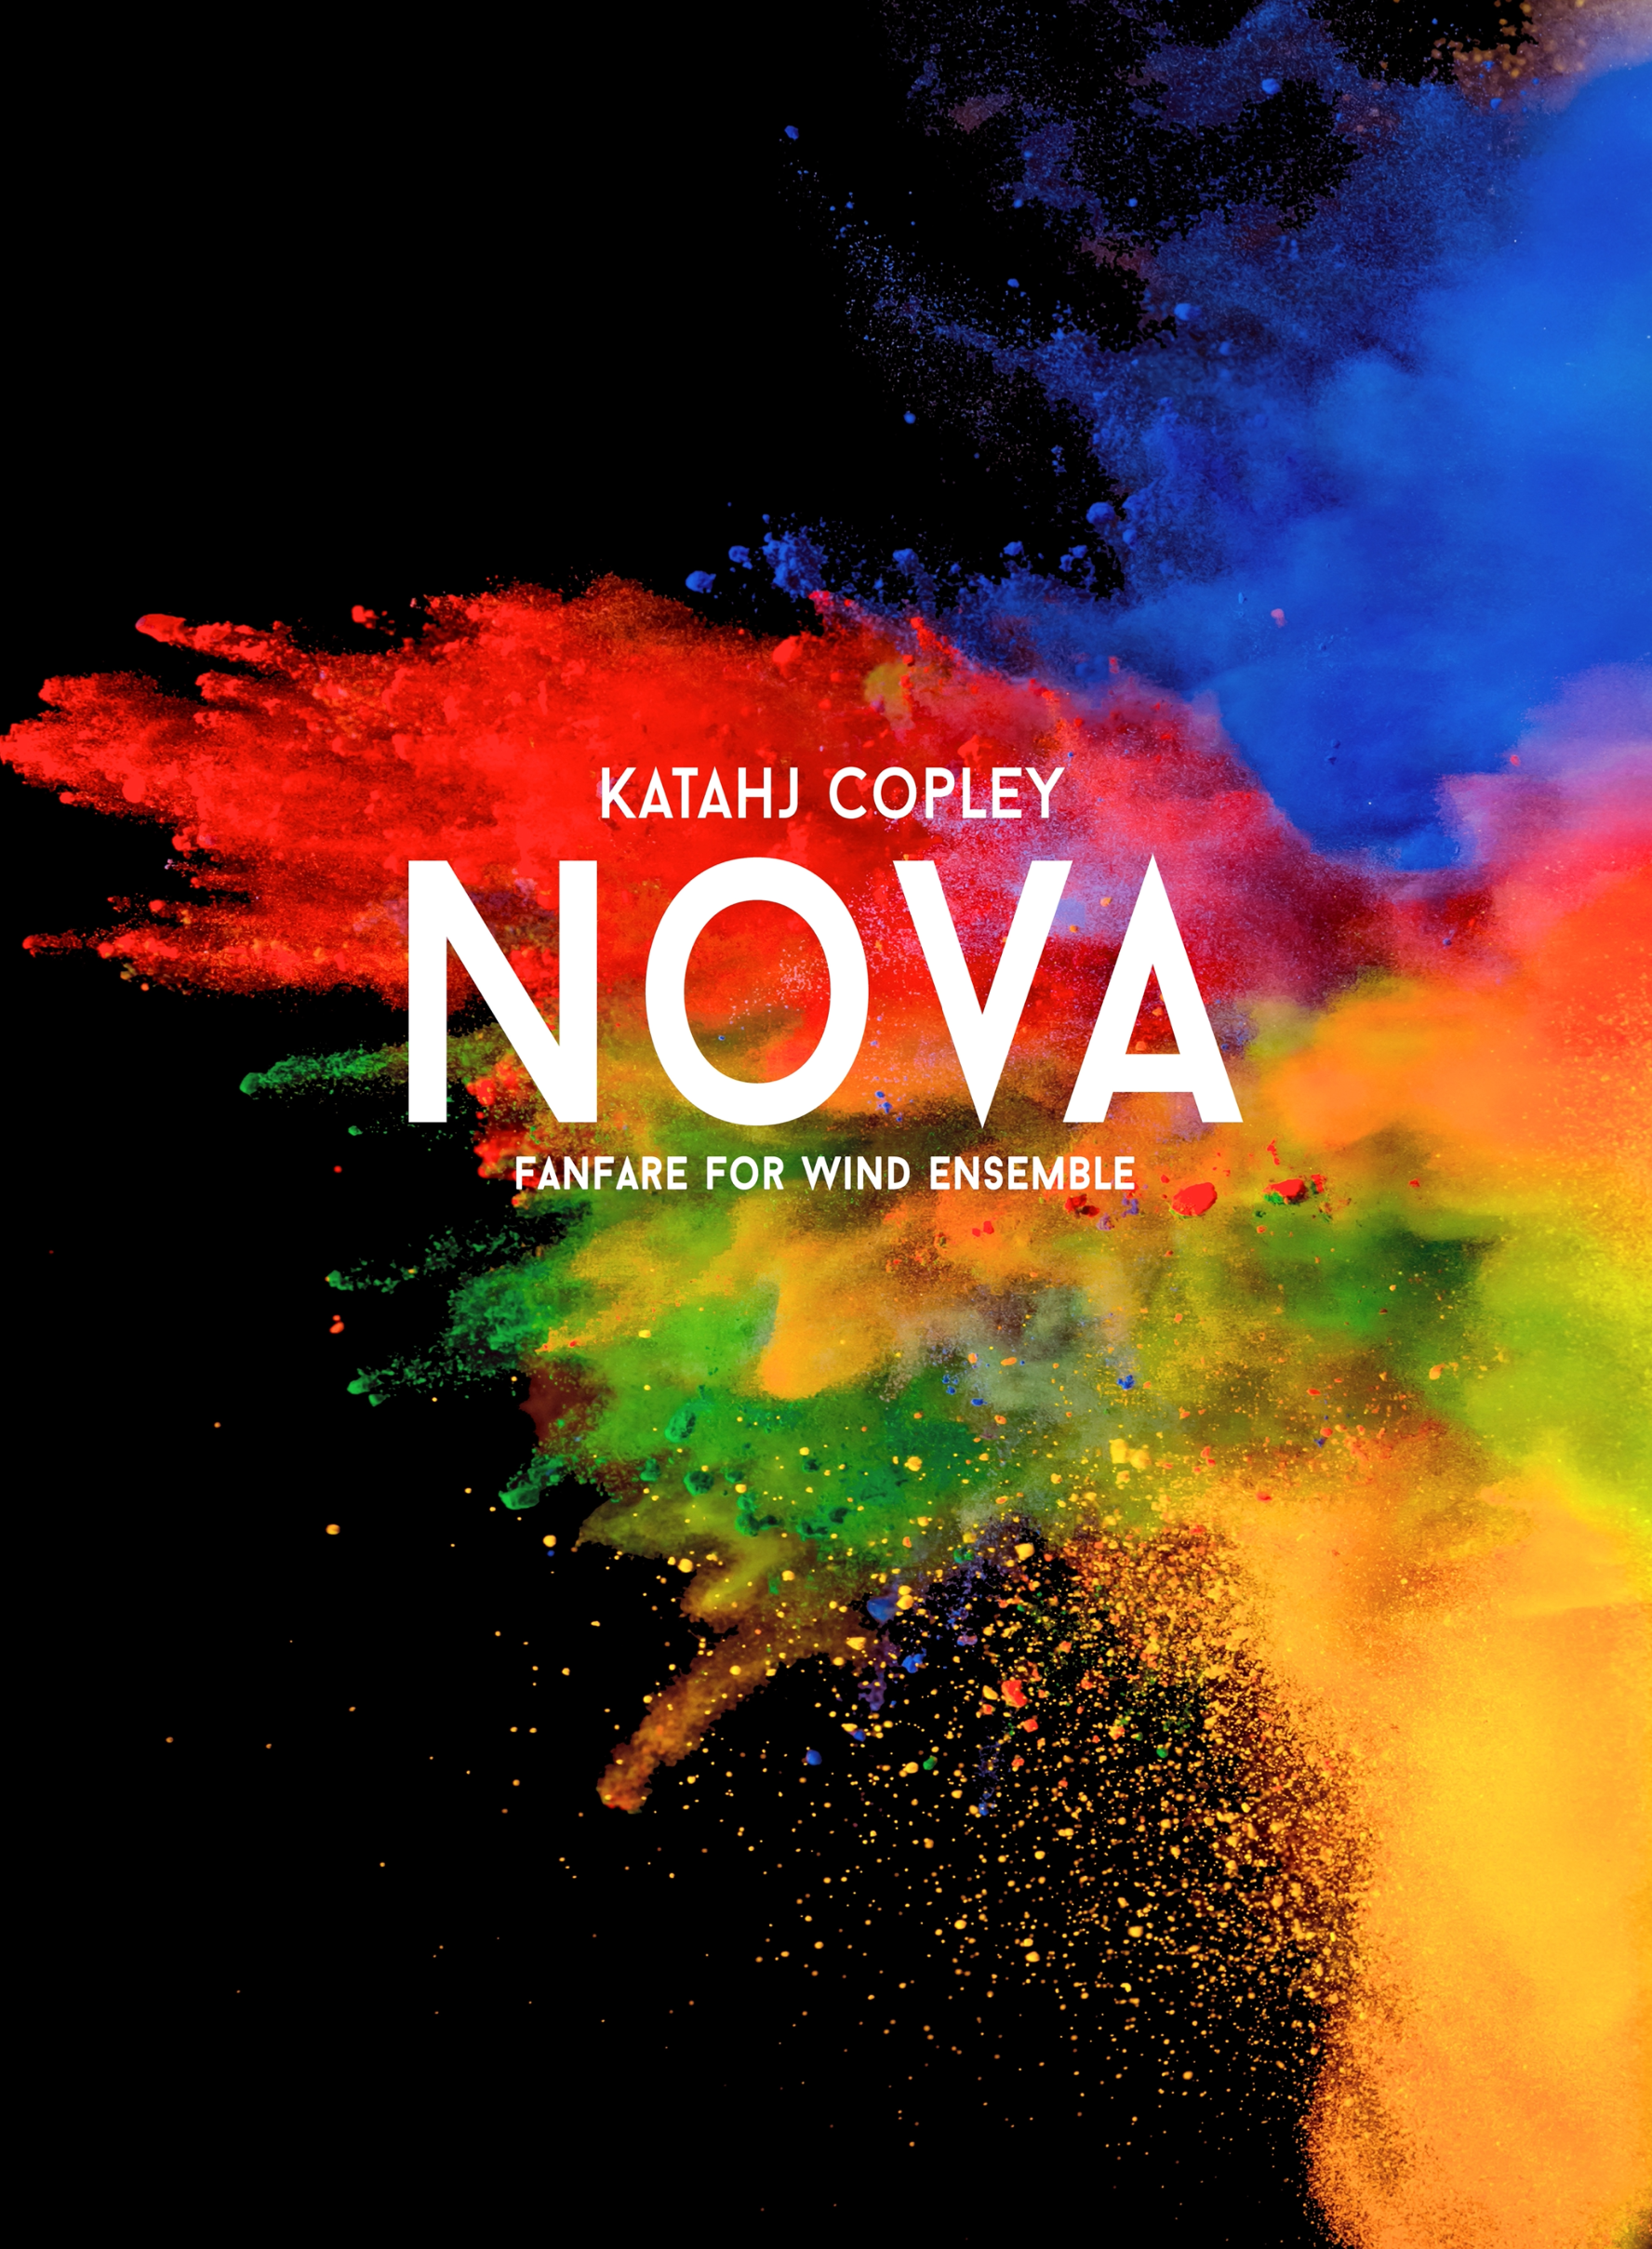 Nova by Katahj Copley